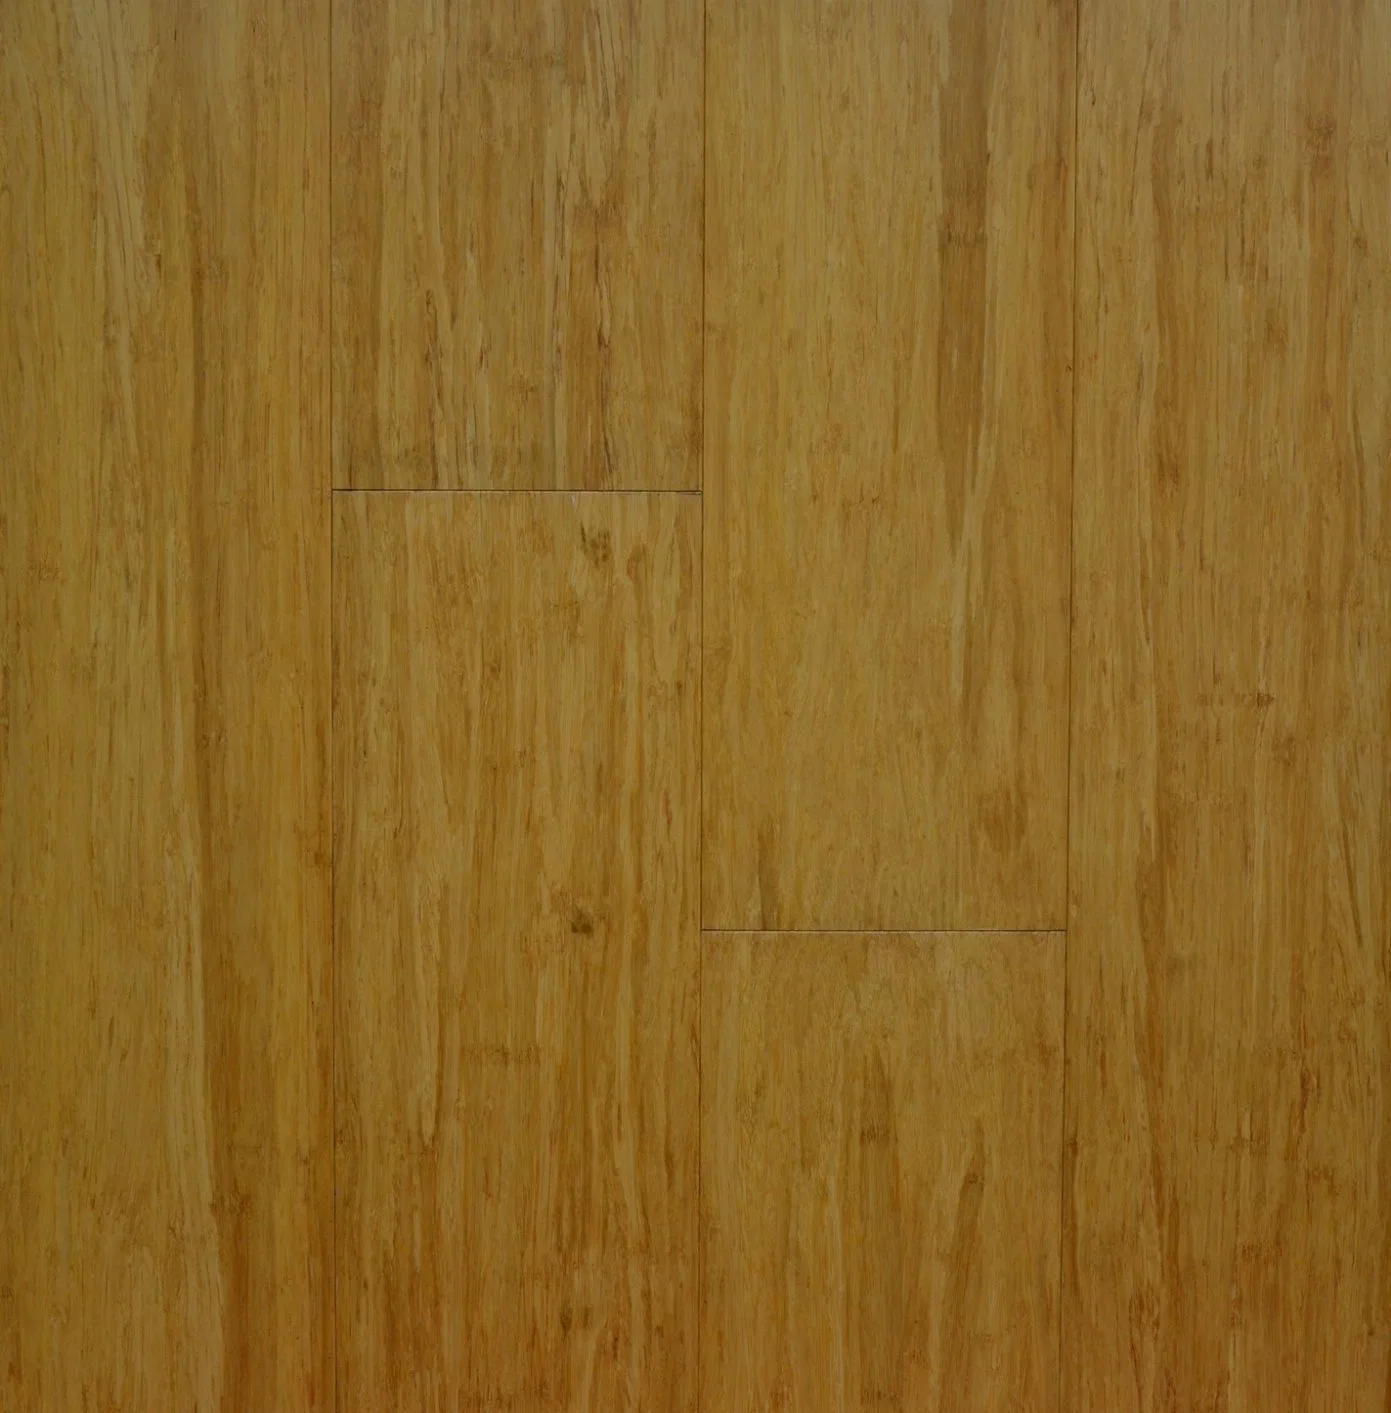 Hot Sell Strandwoven Bamboo Flooring 100% Solid Bamboo Flooring for Indoor Flooring